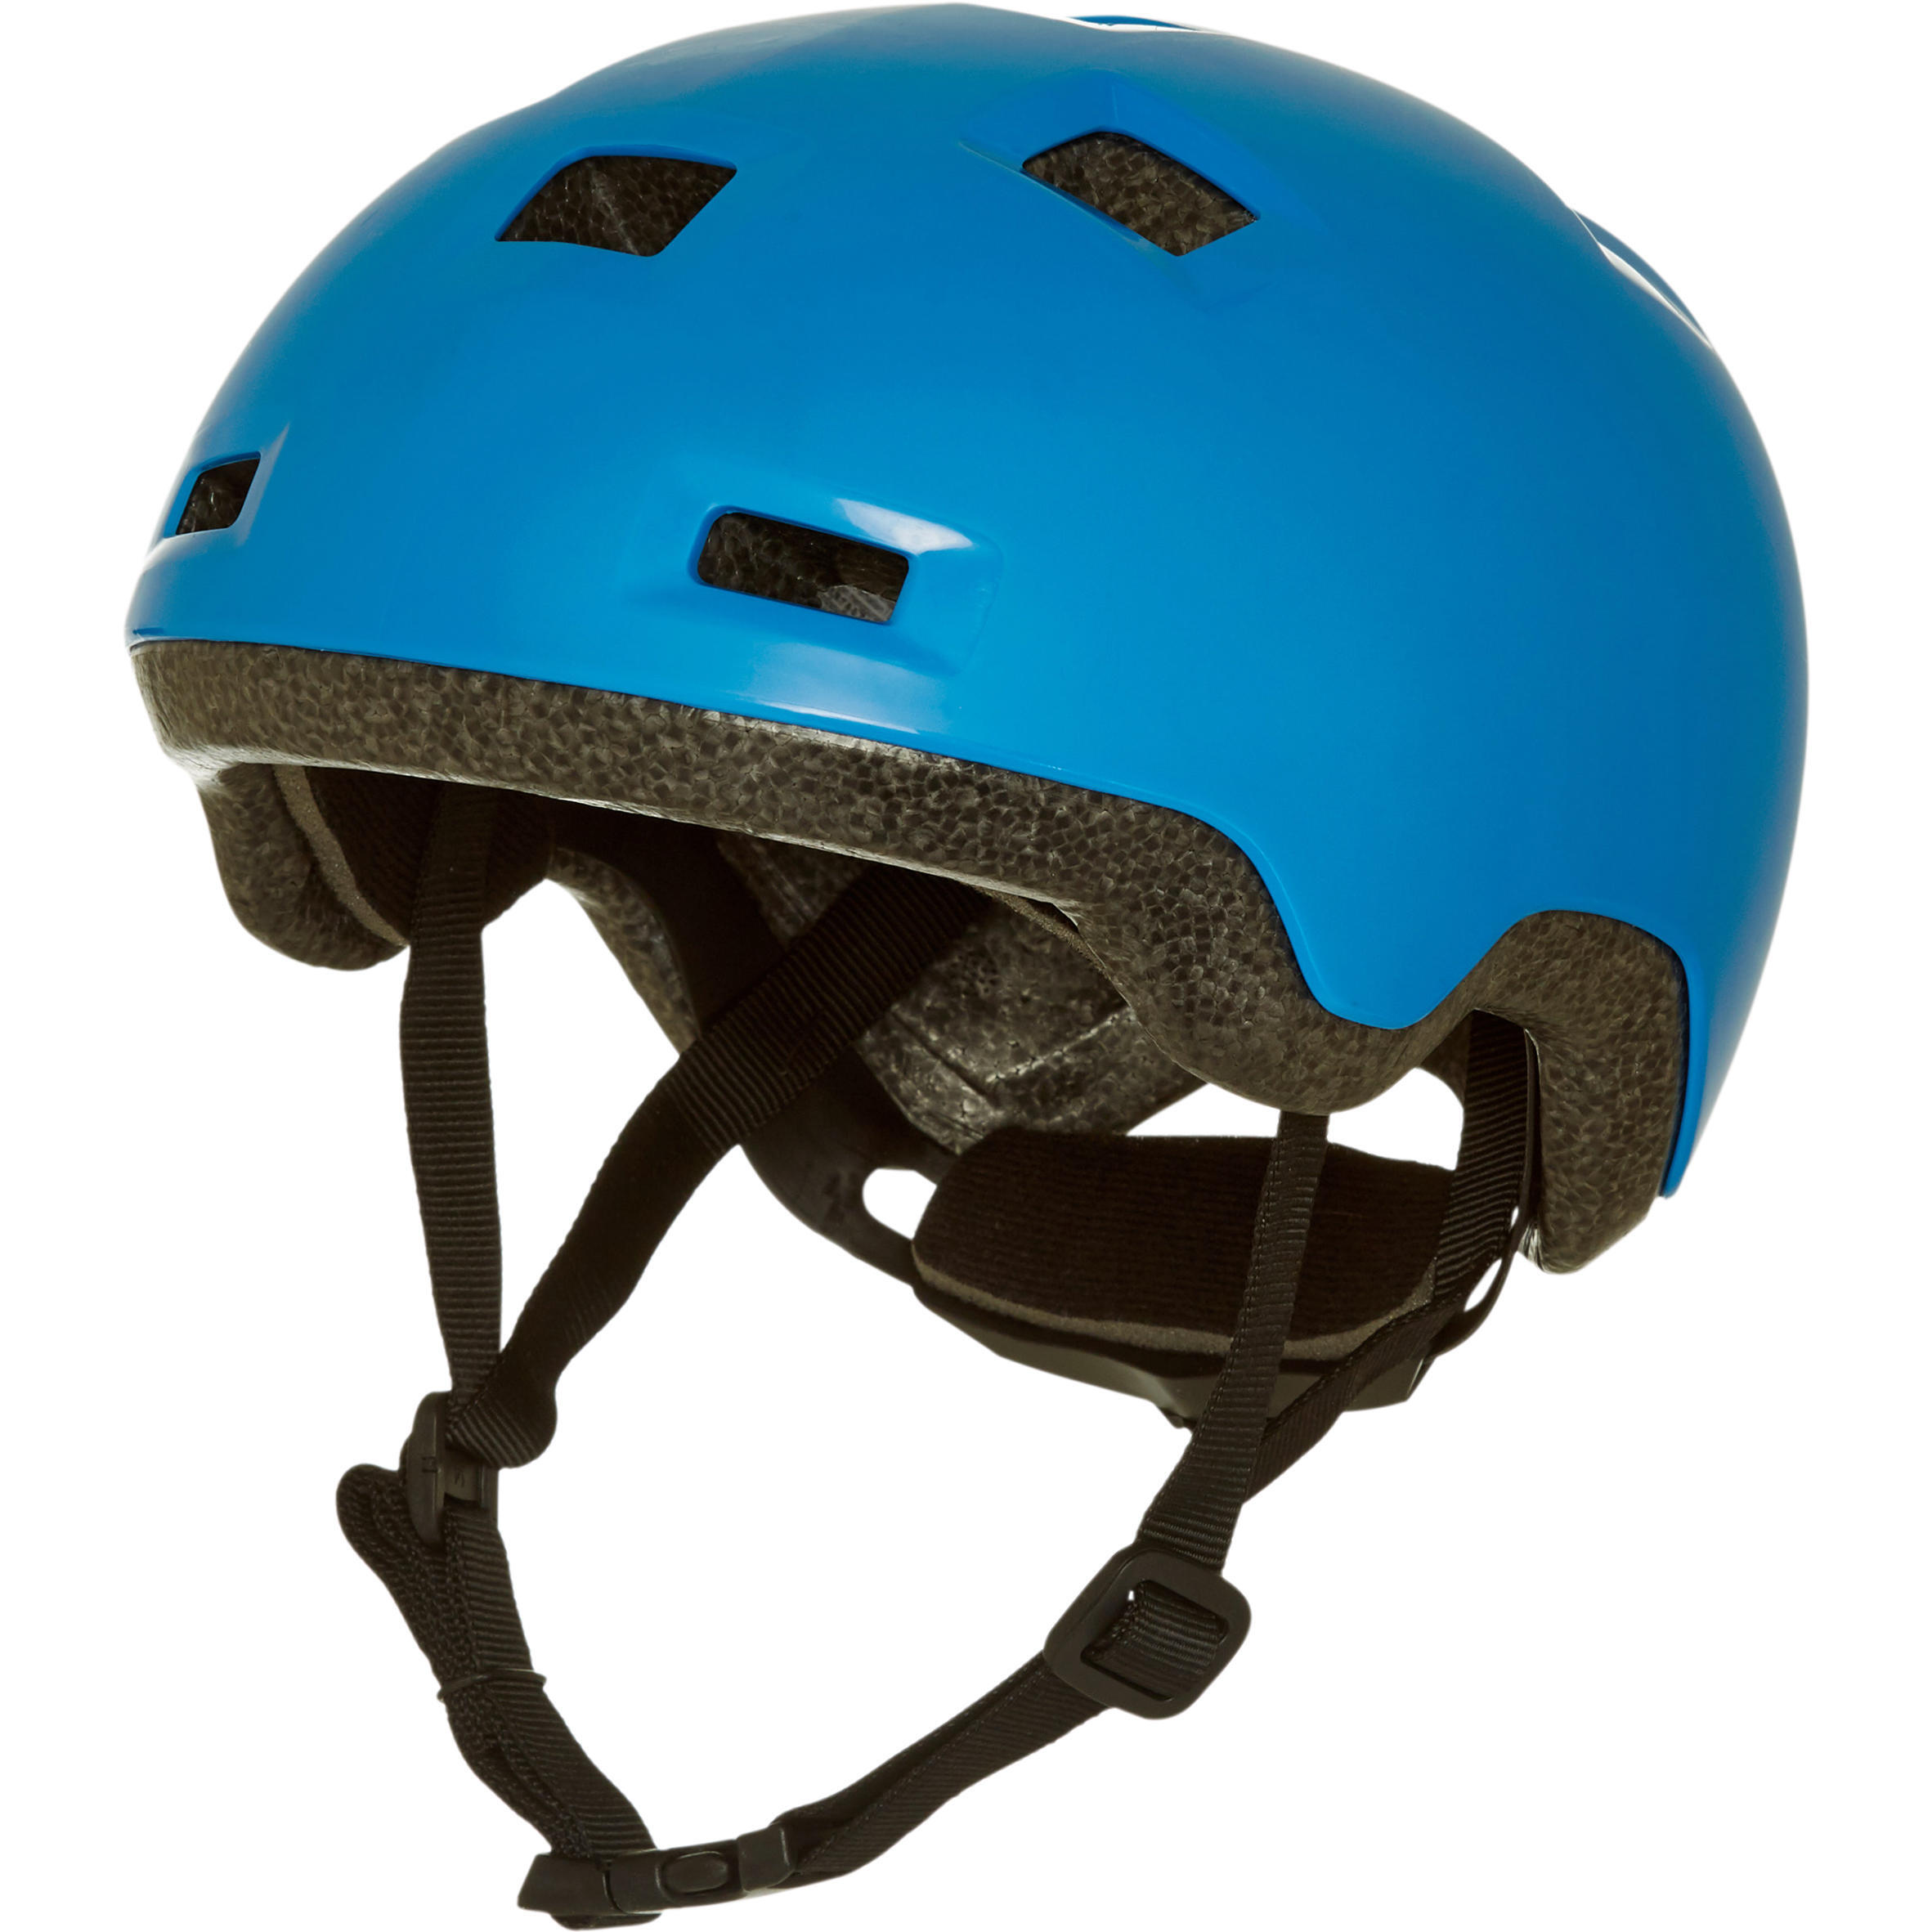 OXELO Kids' Inline Skates Skateboard Scooter Helmet B100 - Blue